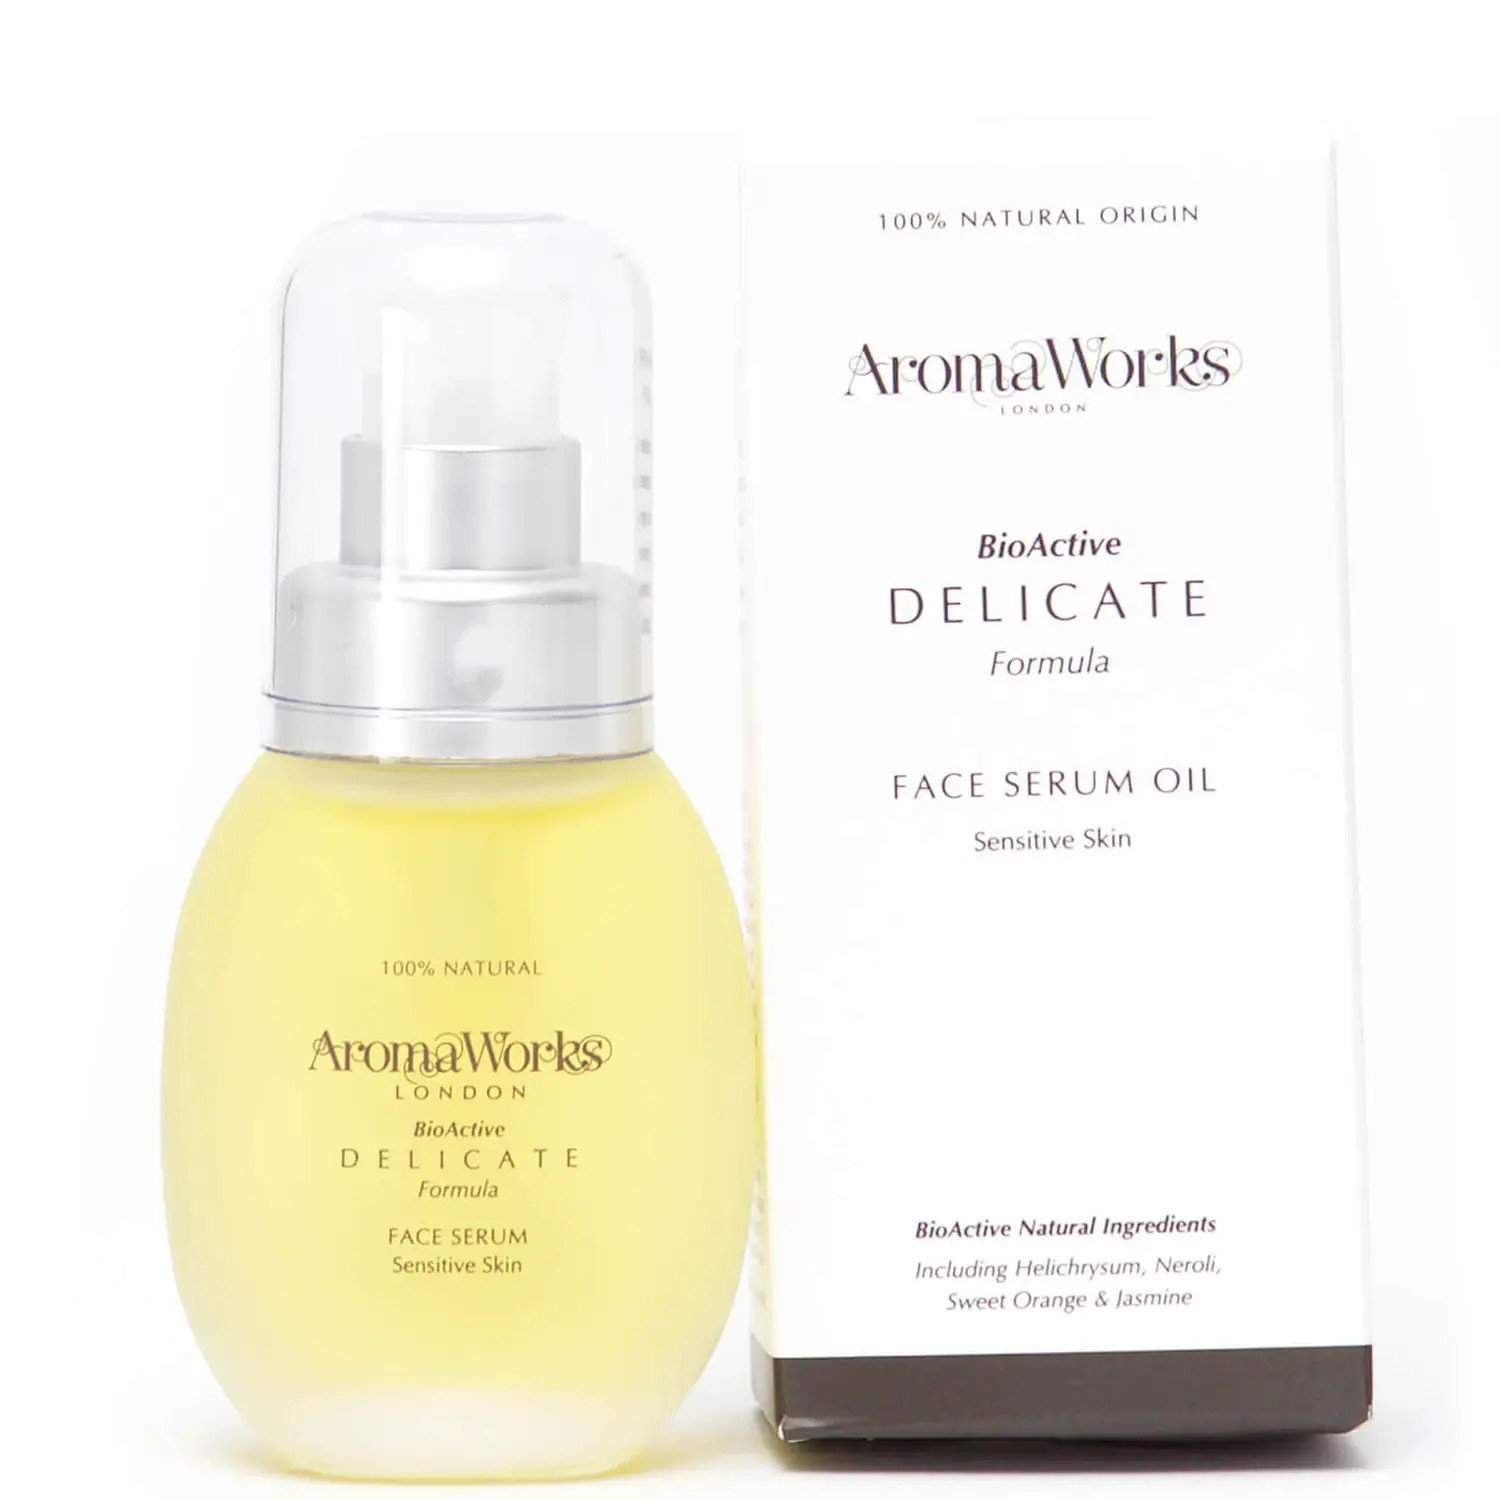 AromaWorks Delicate Face Serum Oil